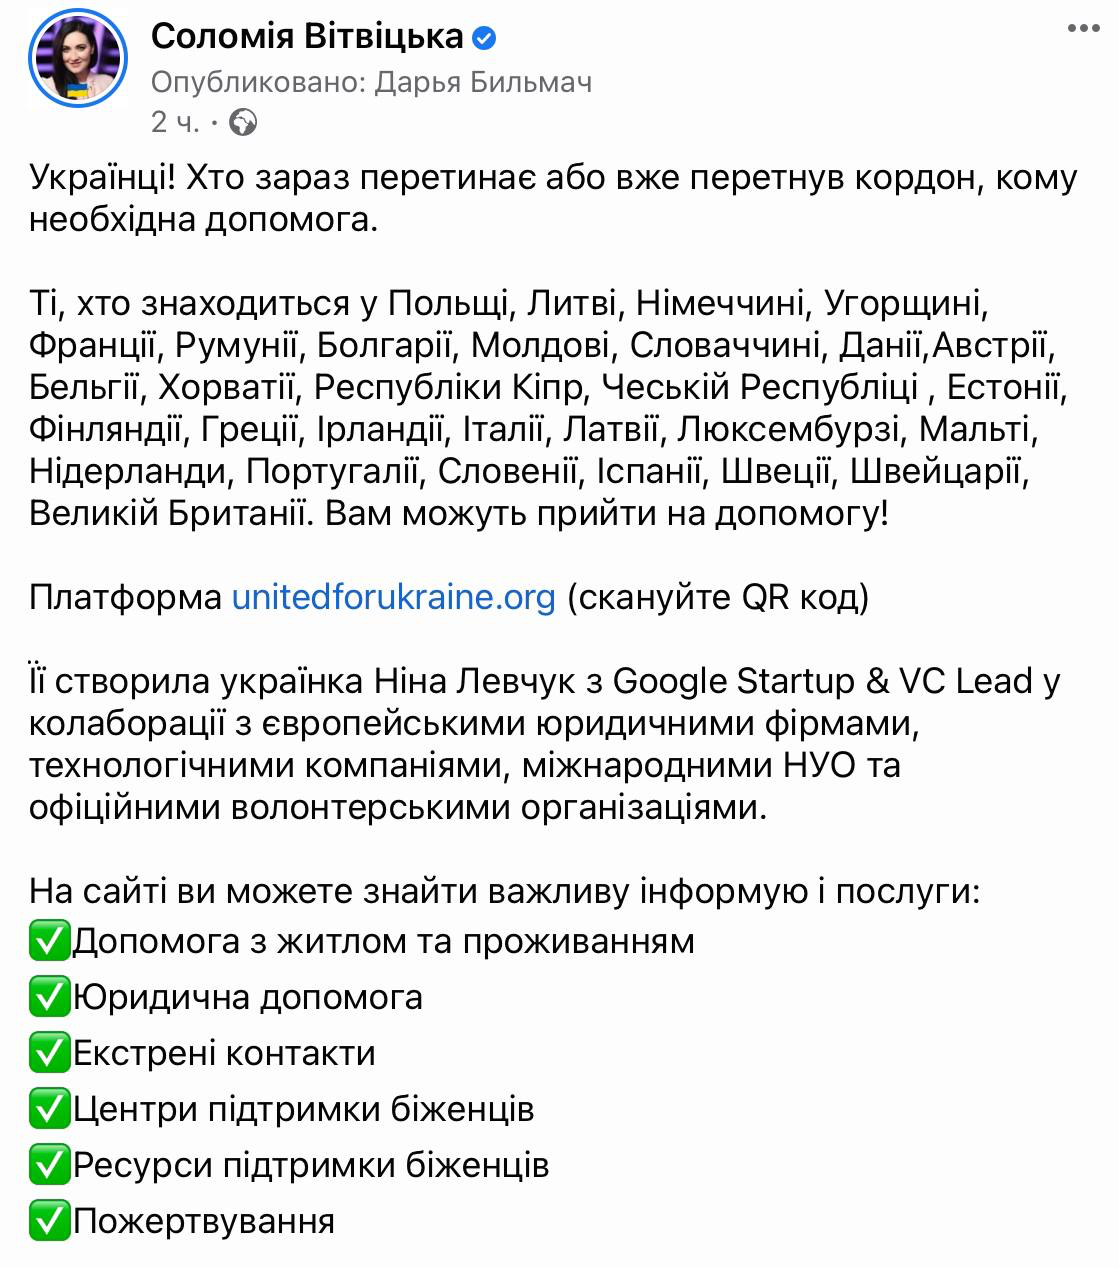 Українка з Google створила захищену від атак платформу для допомоги українцям за кордоном - 2 - изображение